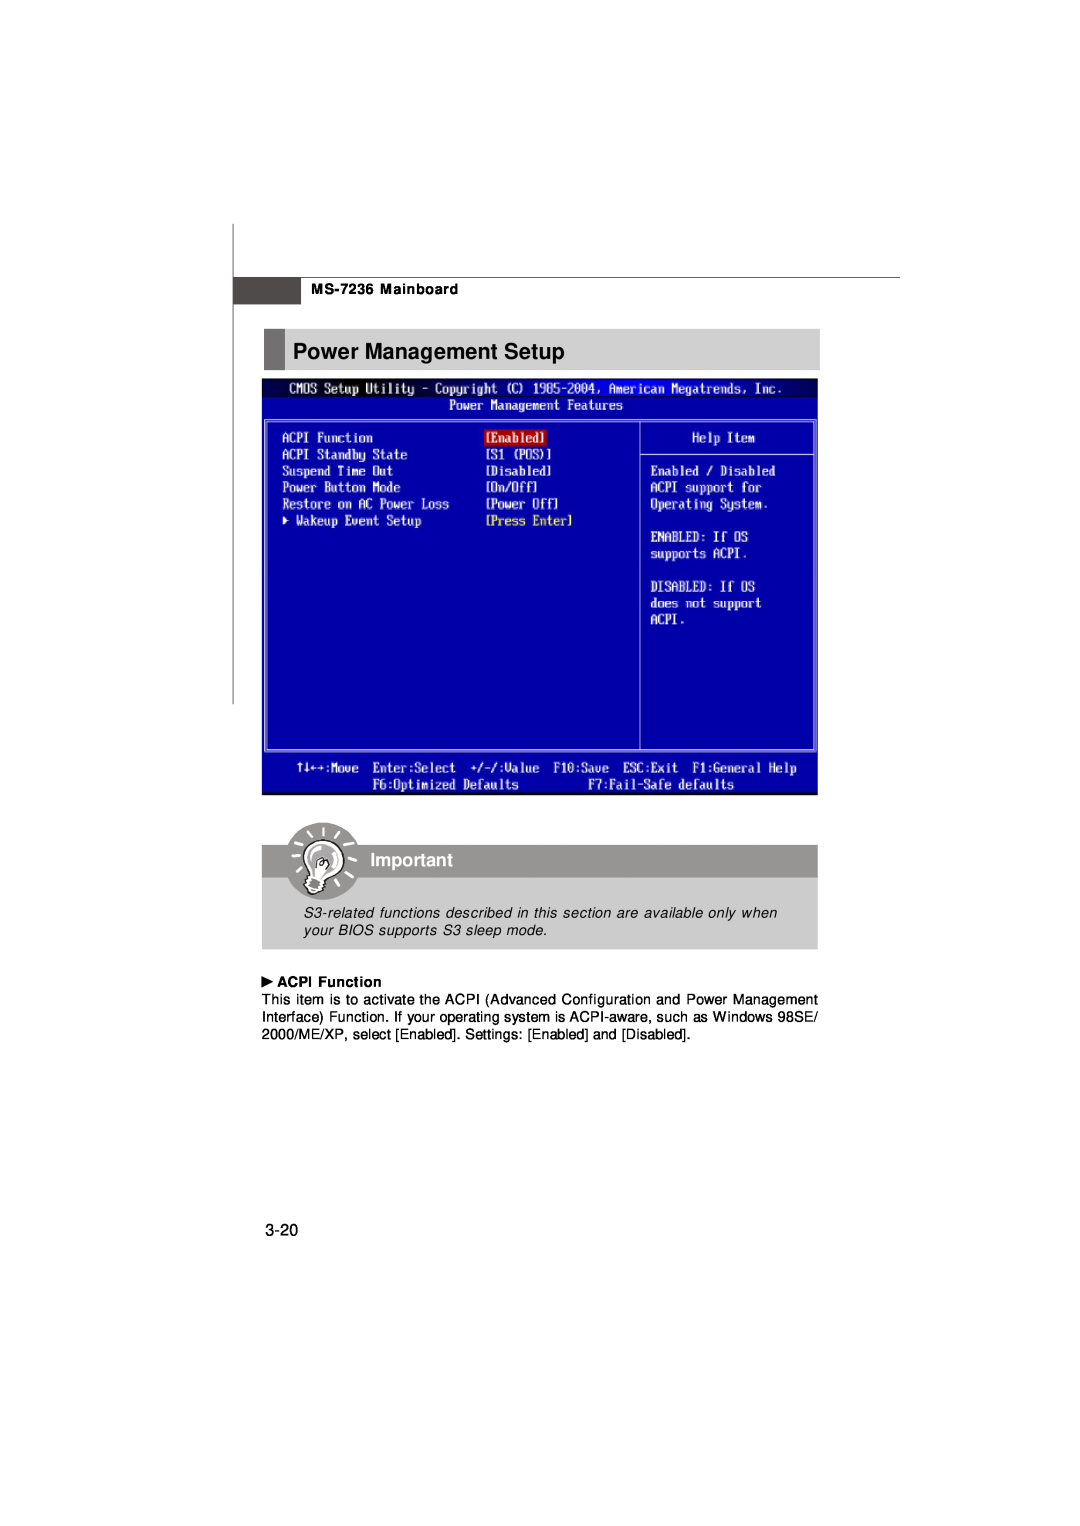 IBM G52-72361X2 manual Power Management Setup, 3-20, ACPI Function, MS-7236 Mainboard 